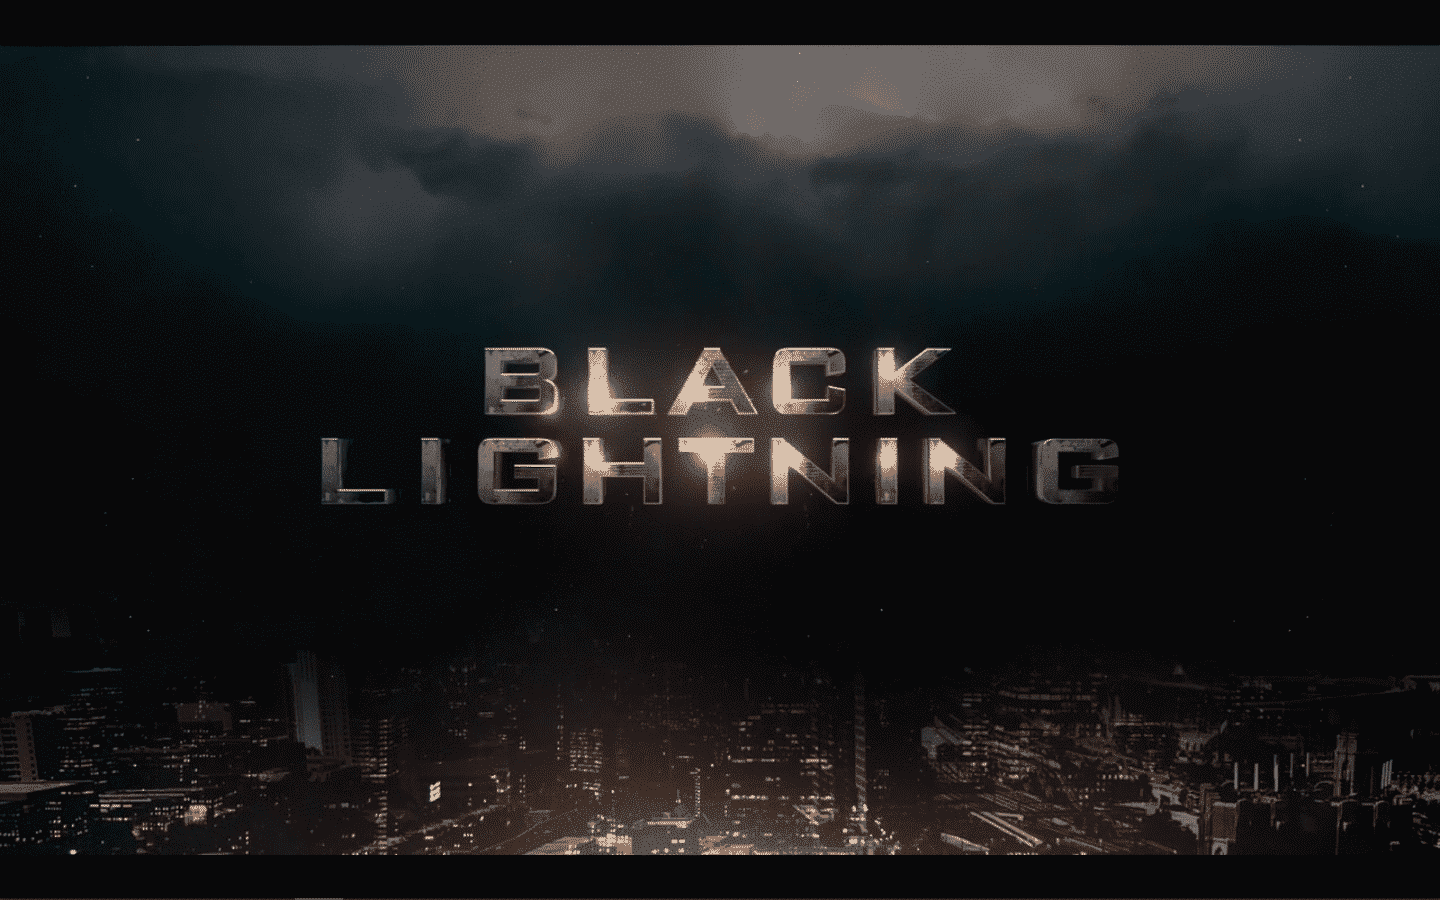 The title card for Black Lightning